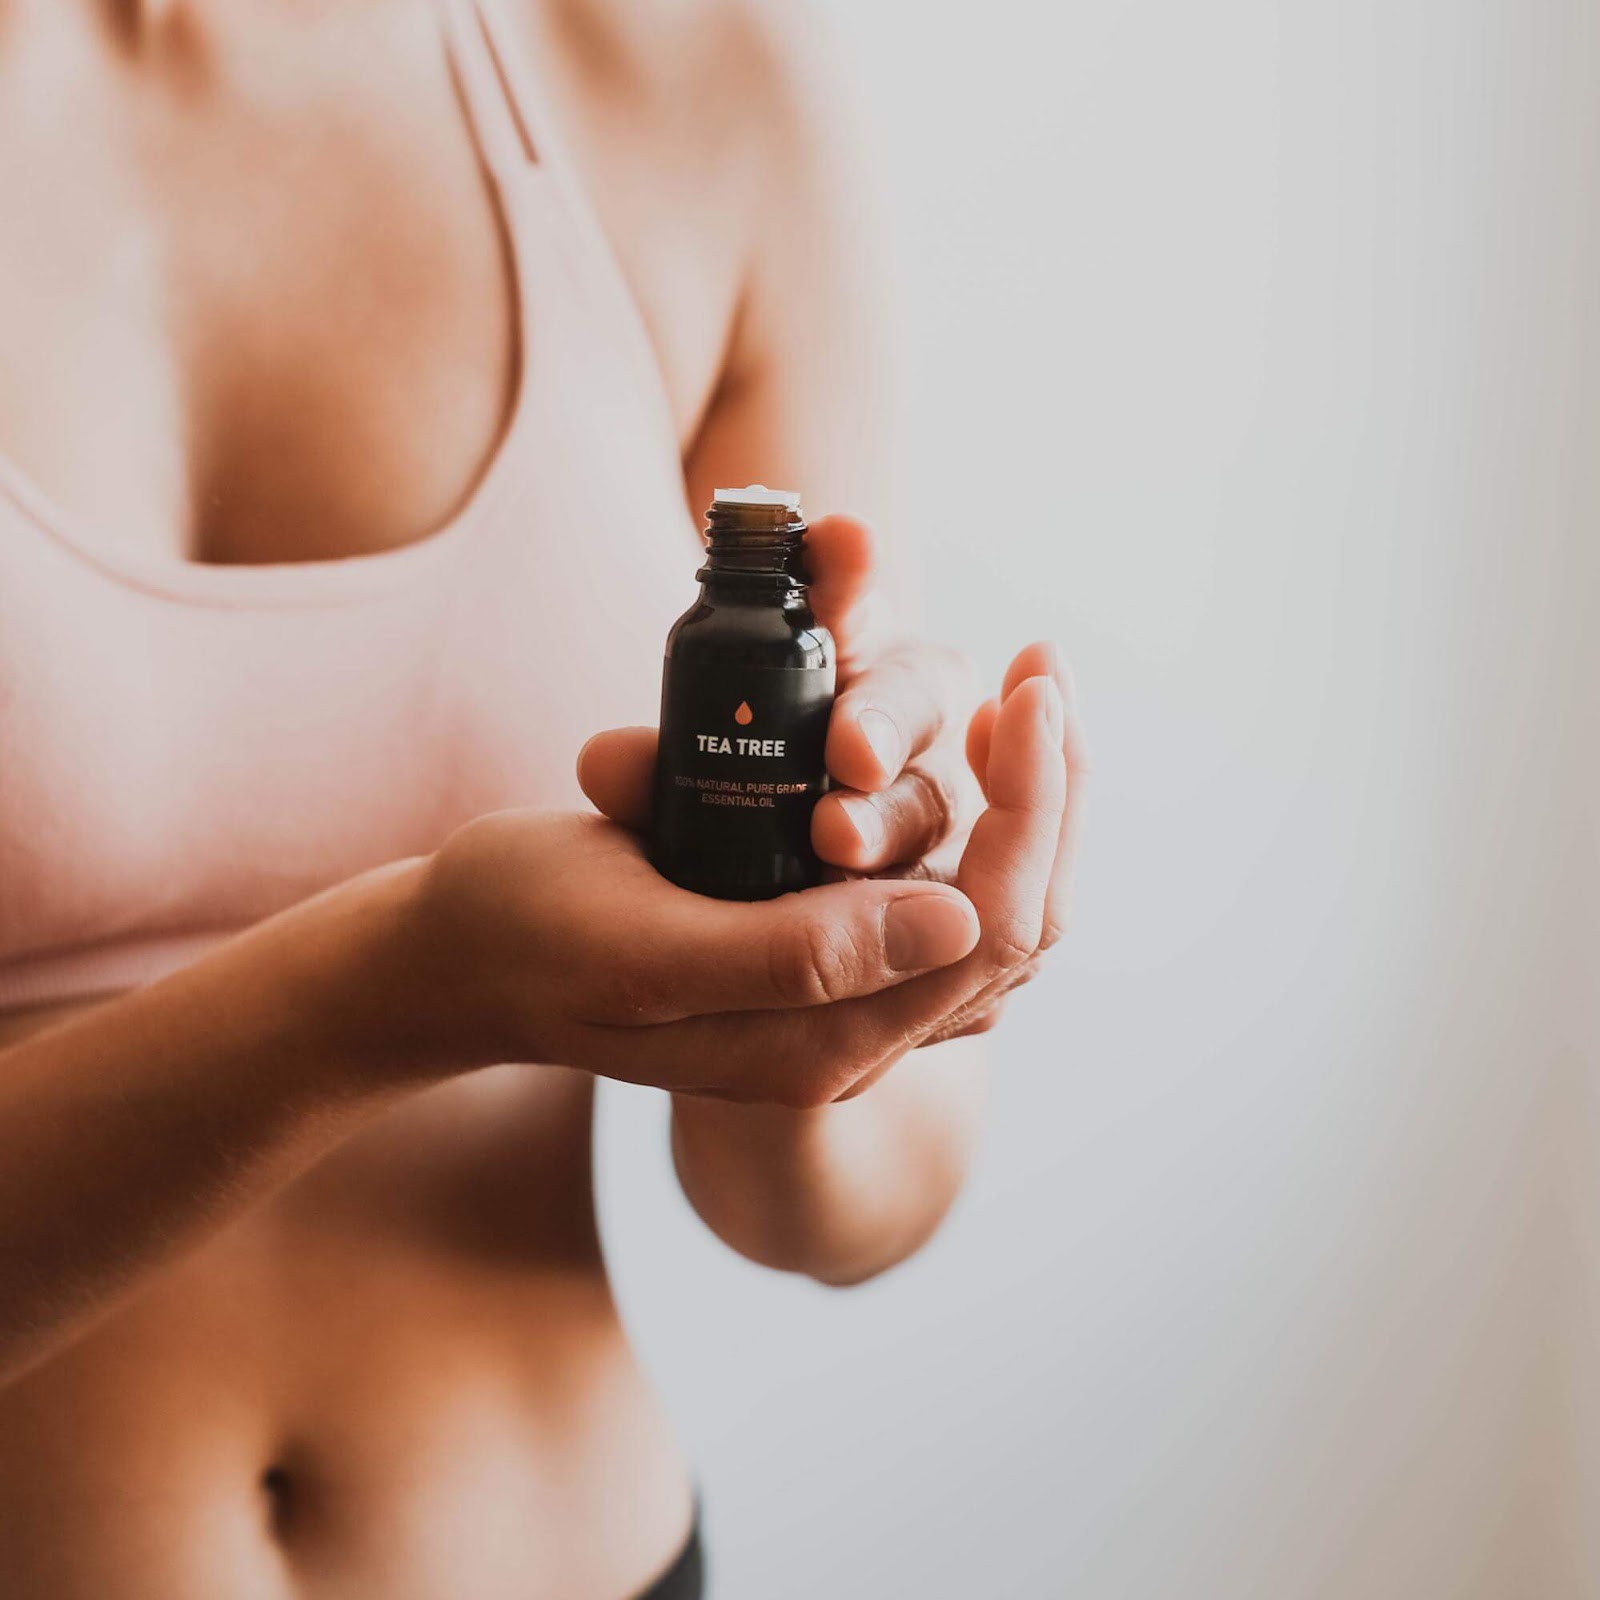 Best essential oils for skin: Tea tree bottle